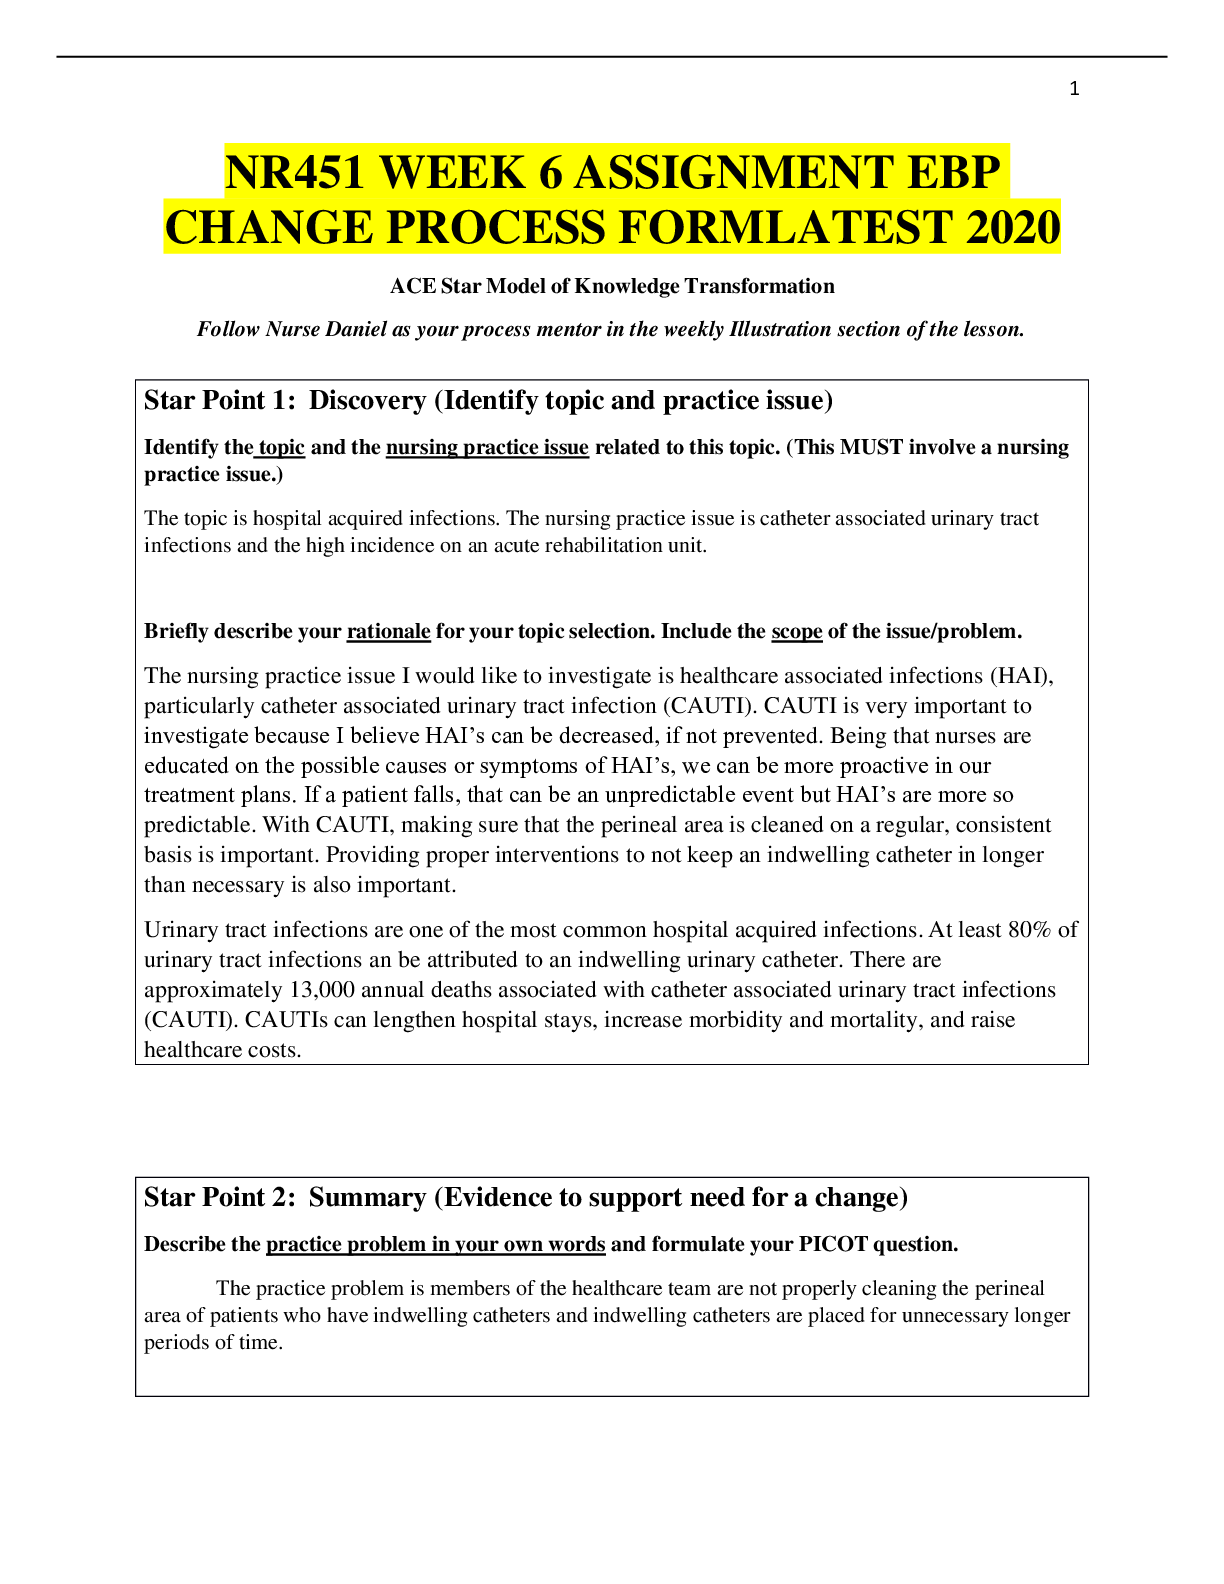 ebp change process assignment